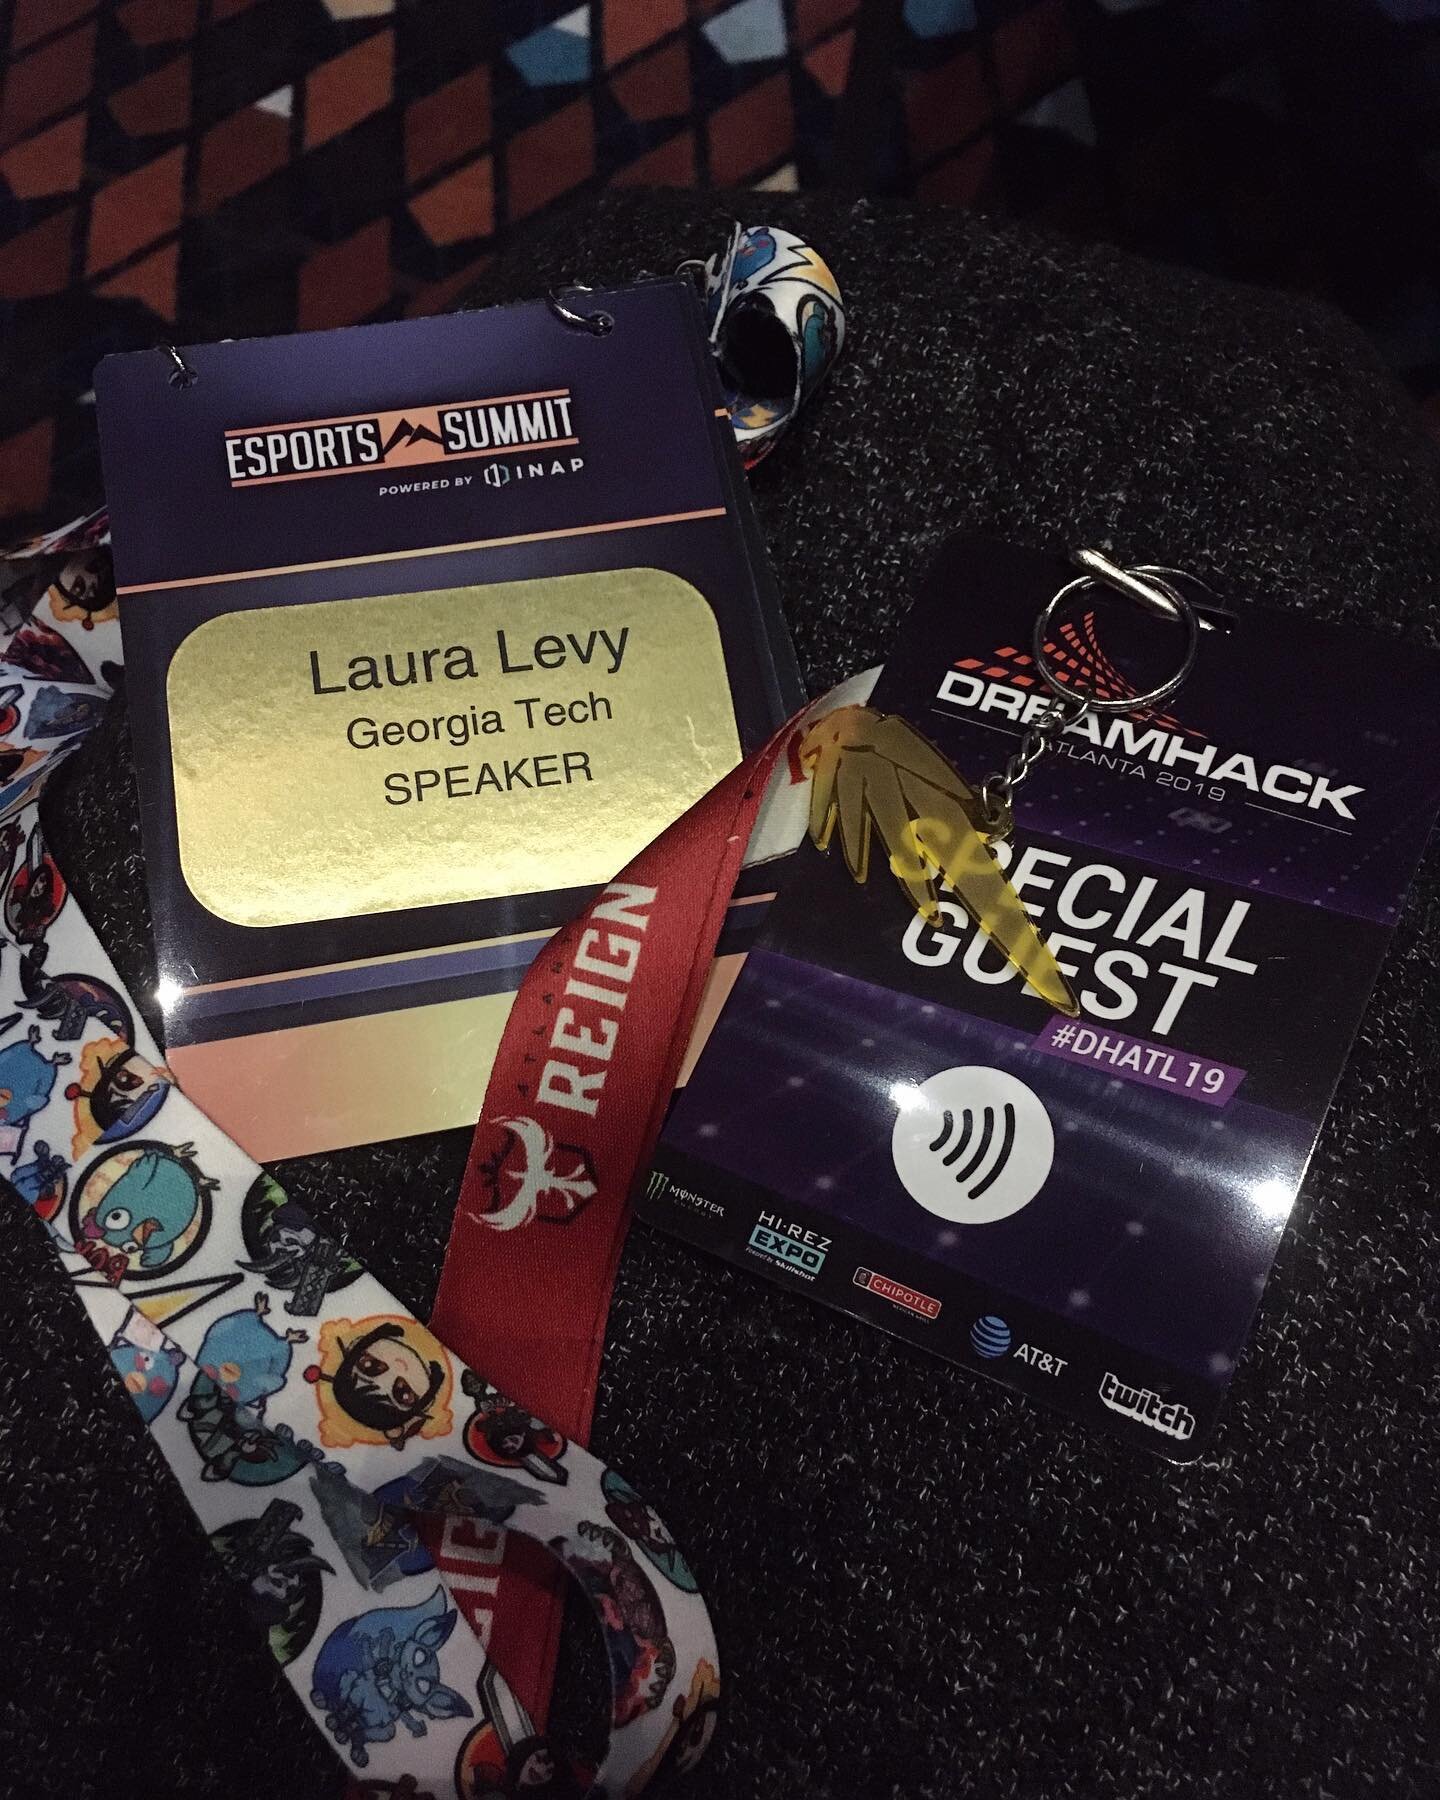 2019 Esports Summit, Dreamhack.jpg